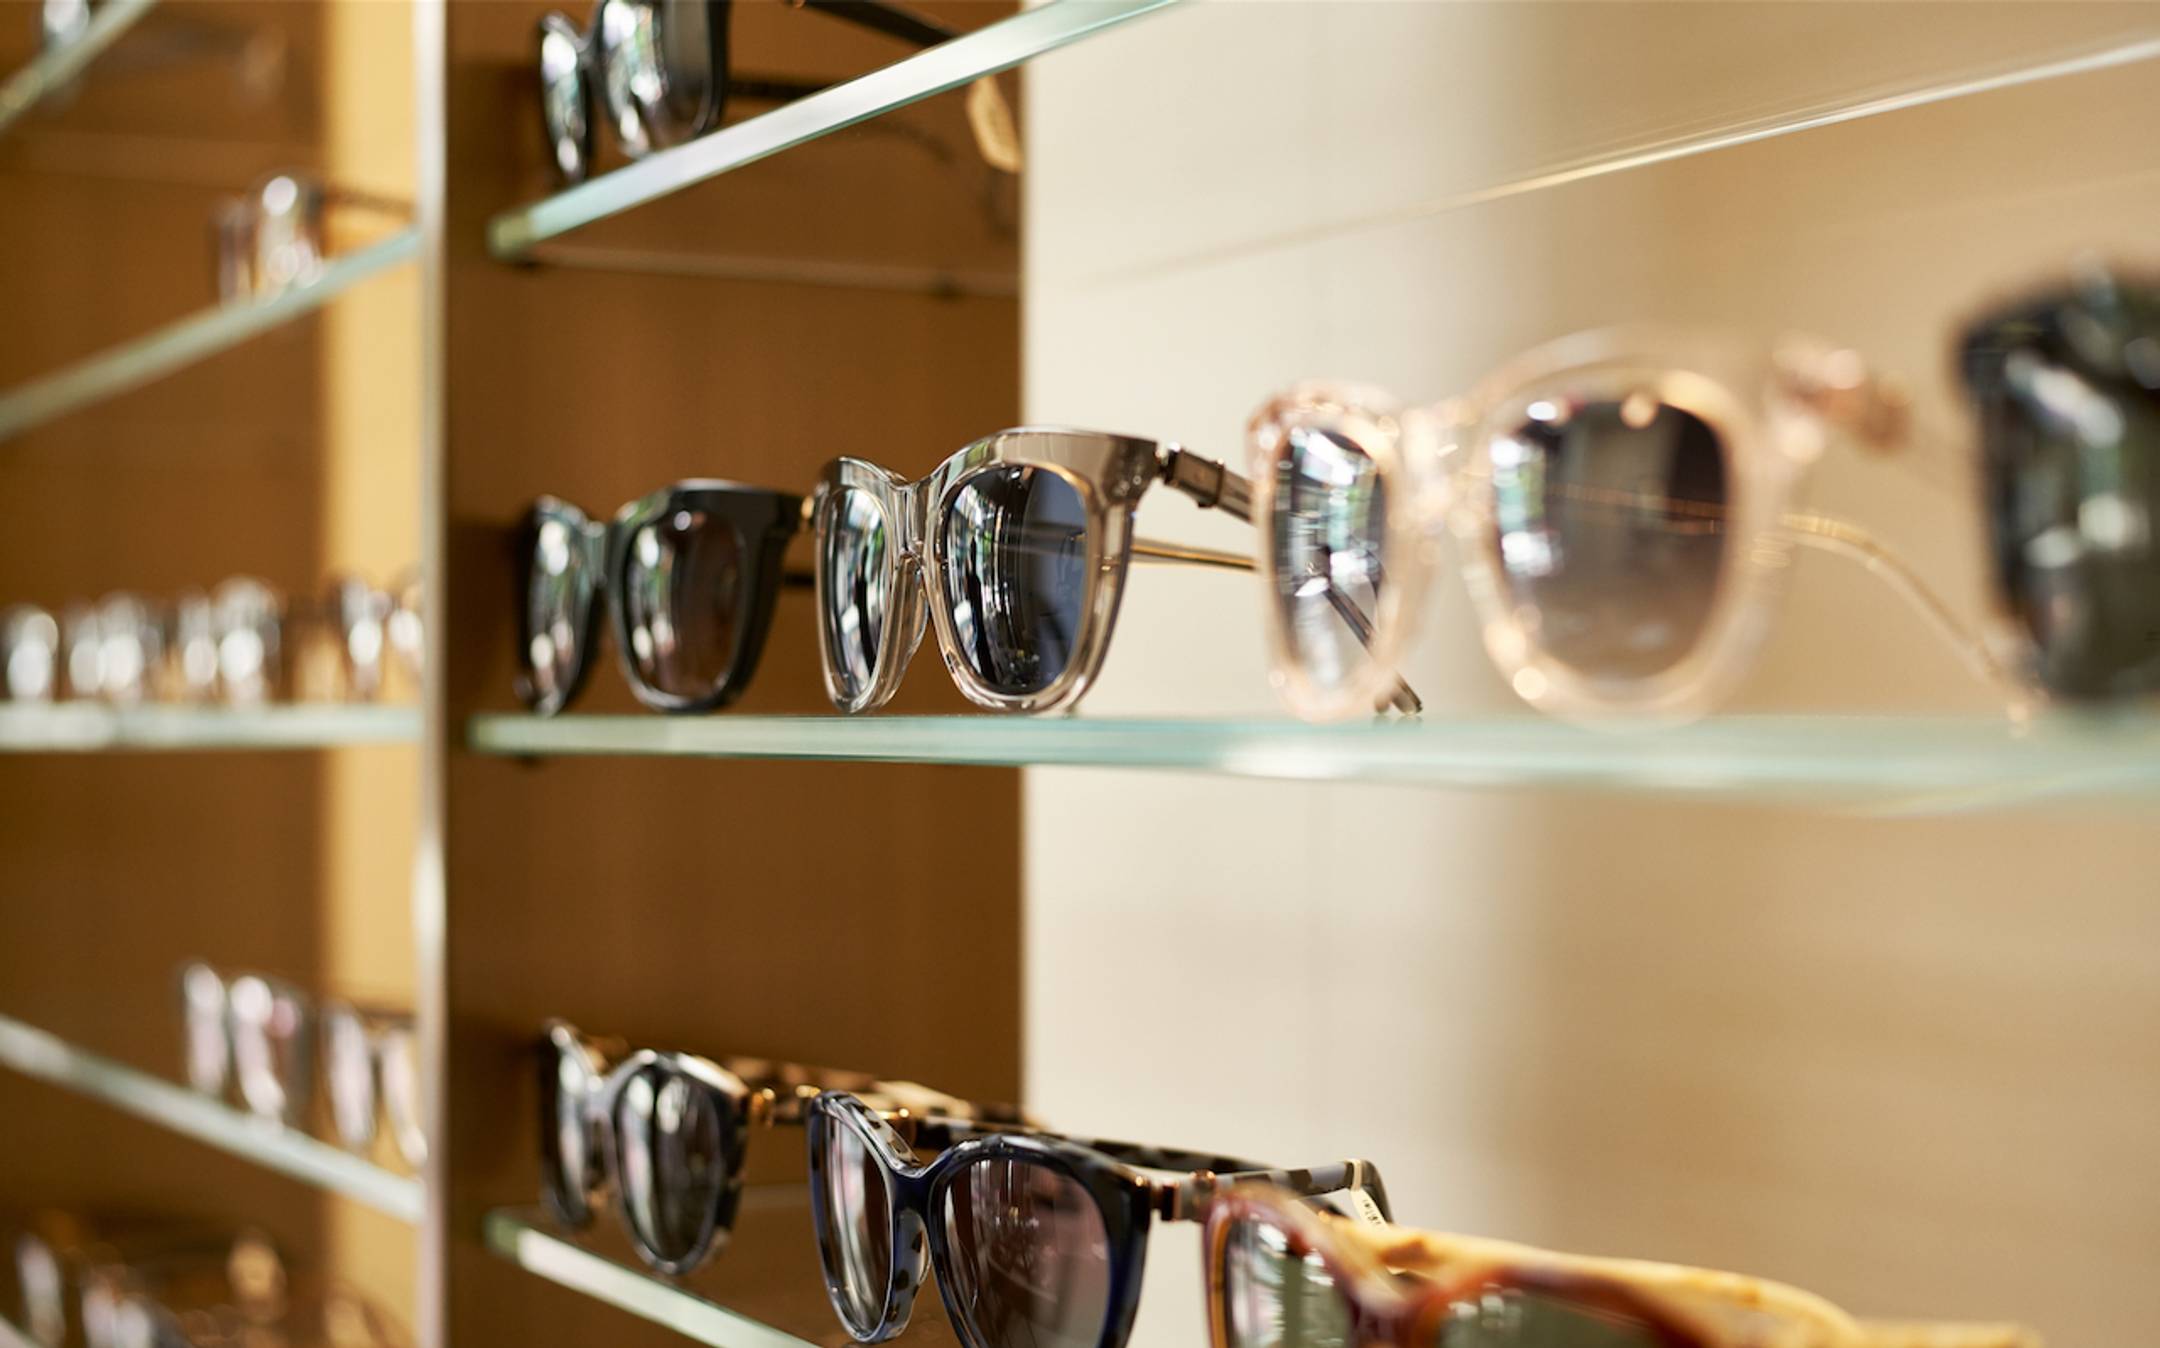 Multiple pairs of sunglasses sitting on a shelf